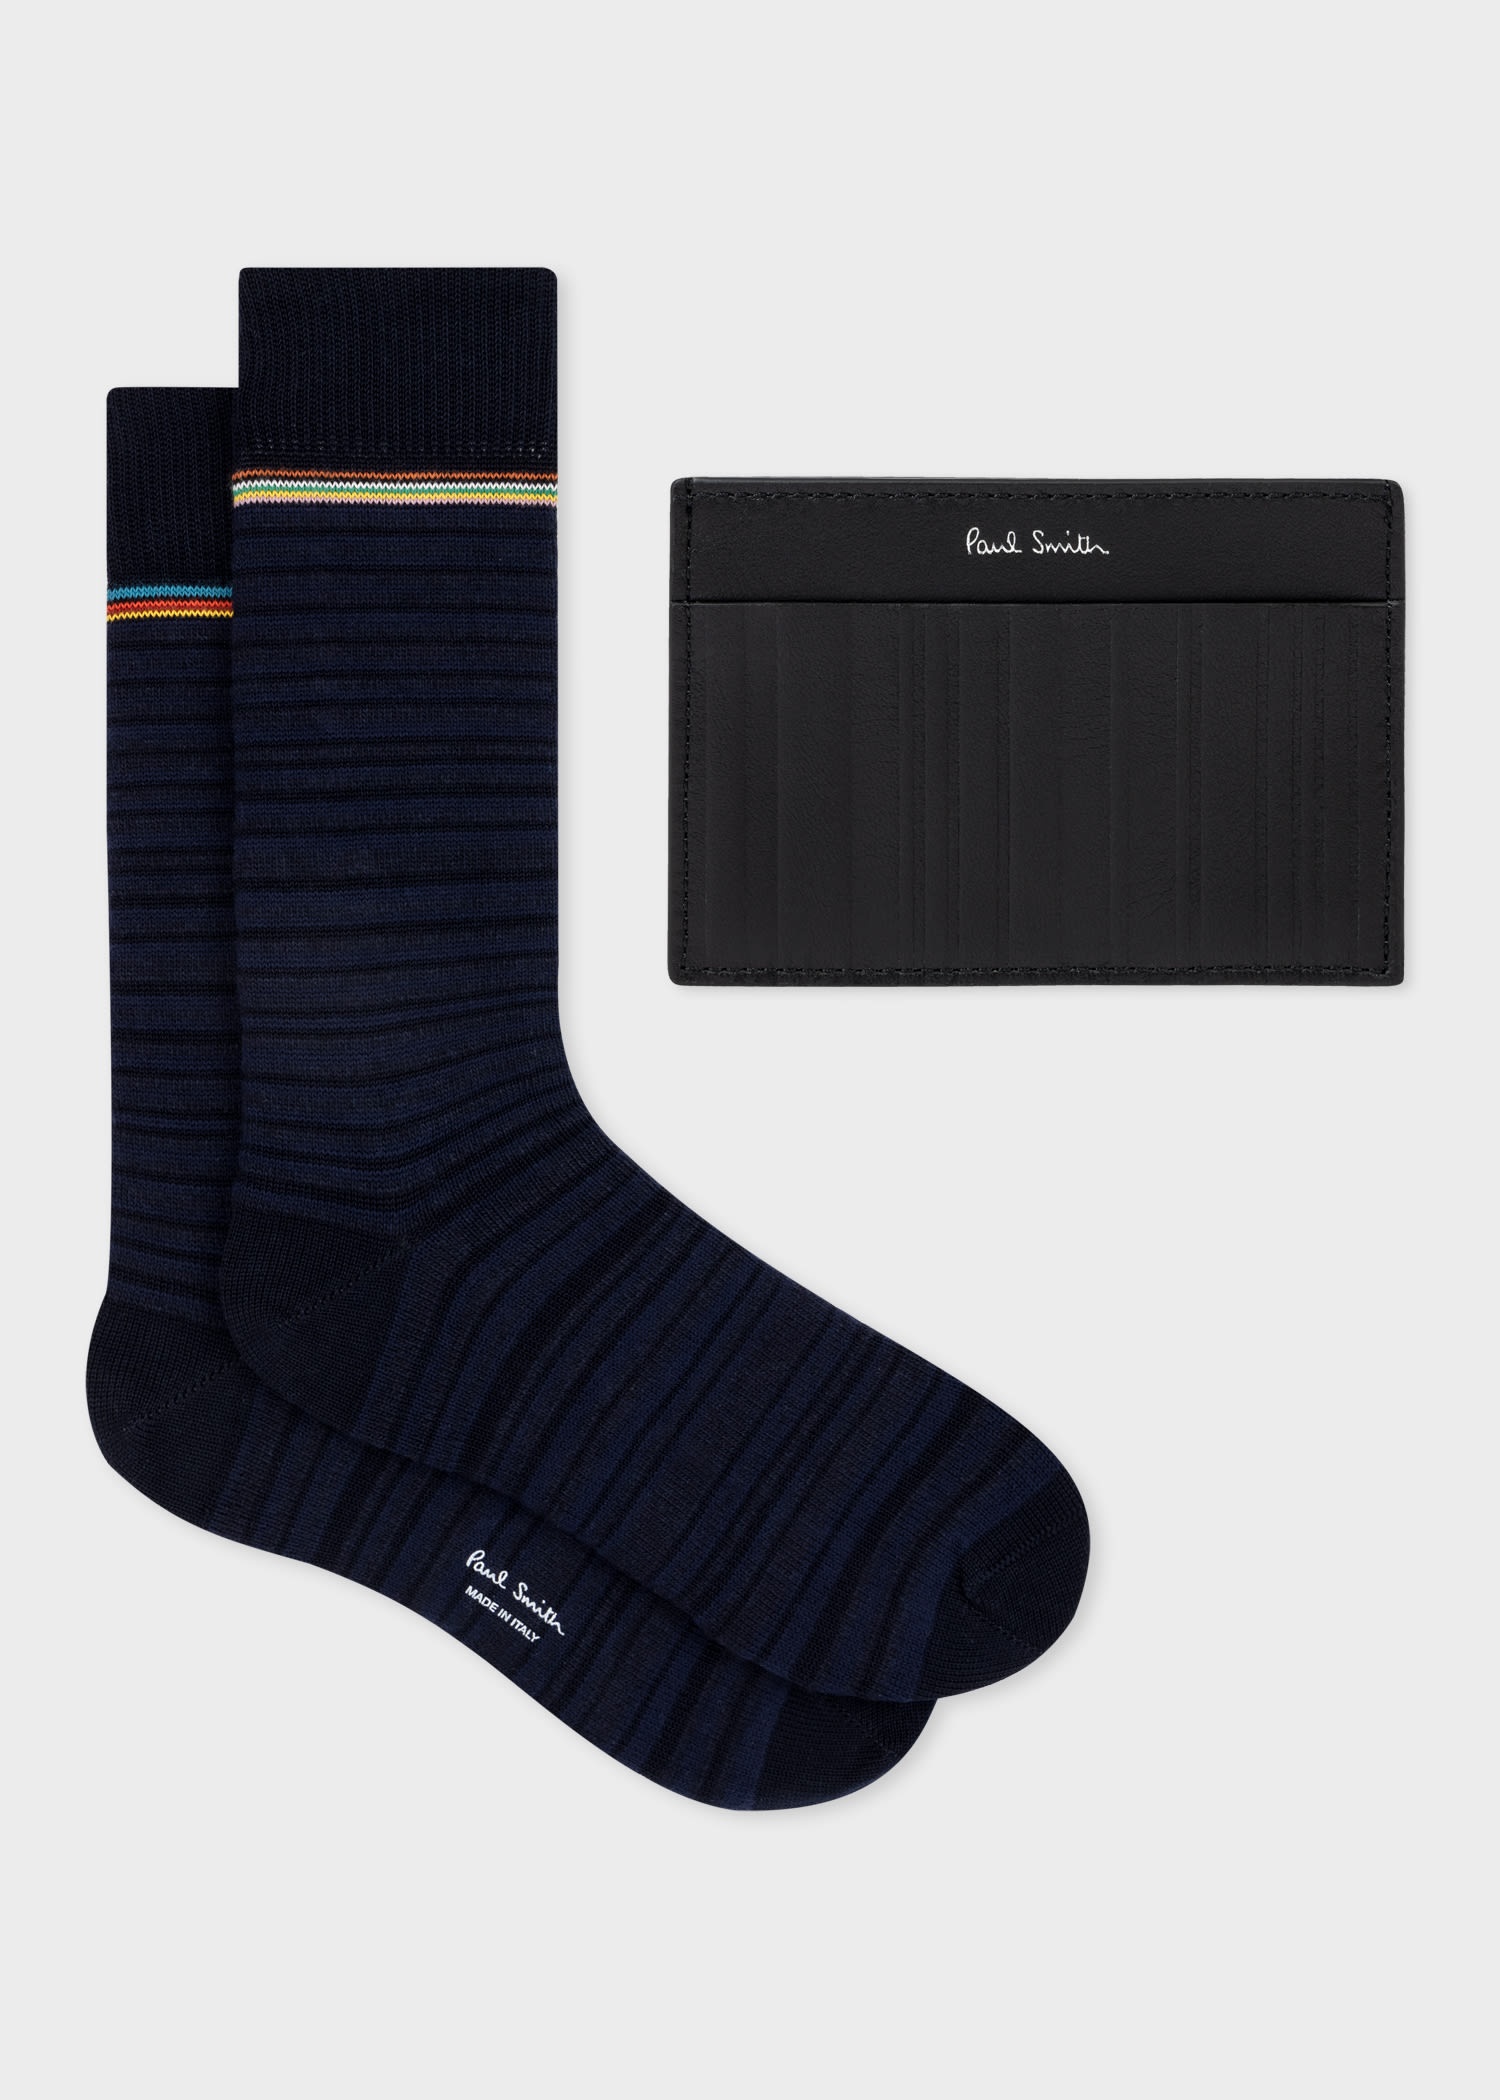 'Shadow Stripe' Socks & Card Holder Gift Set - 1